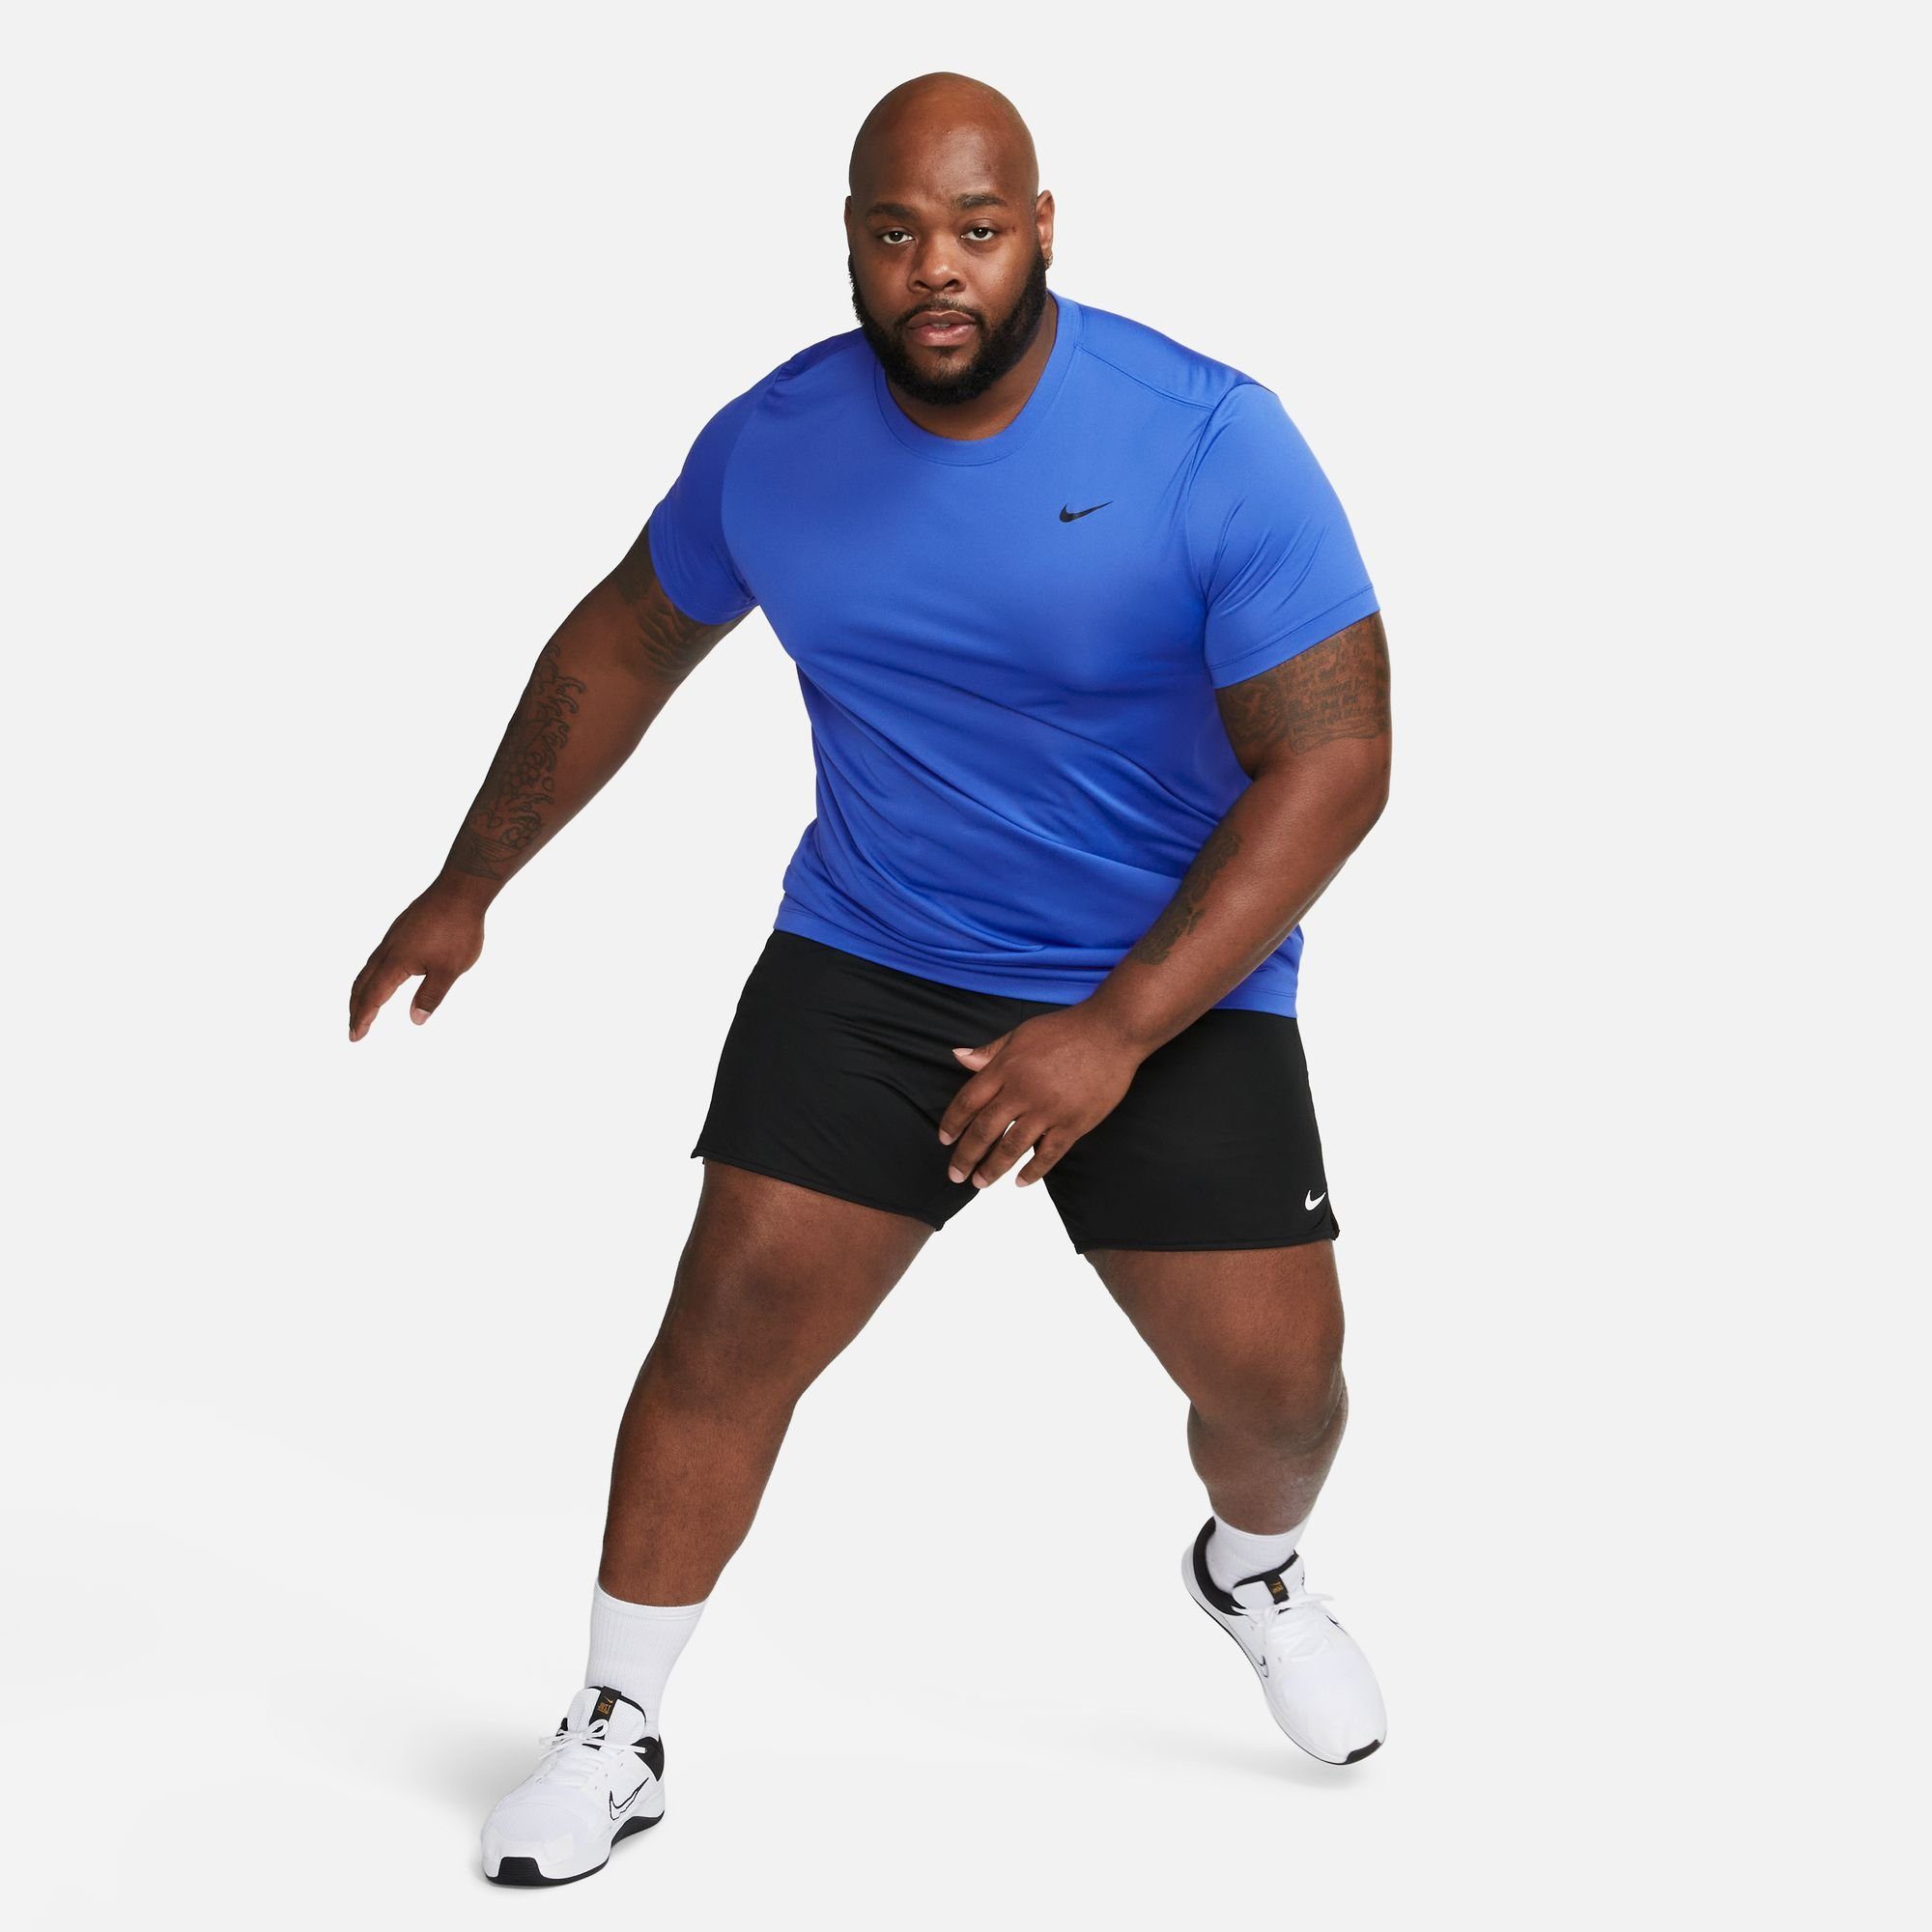 T-SHIRT blau MEN'S Nike Trainingsshirt DRI-FIT LEGEND FITNESS